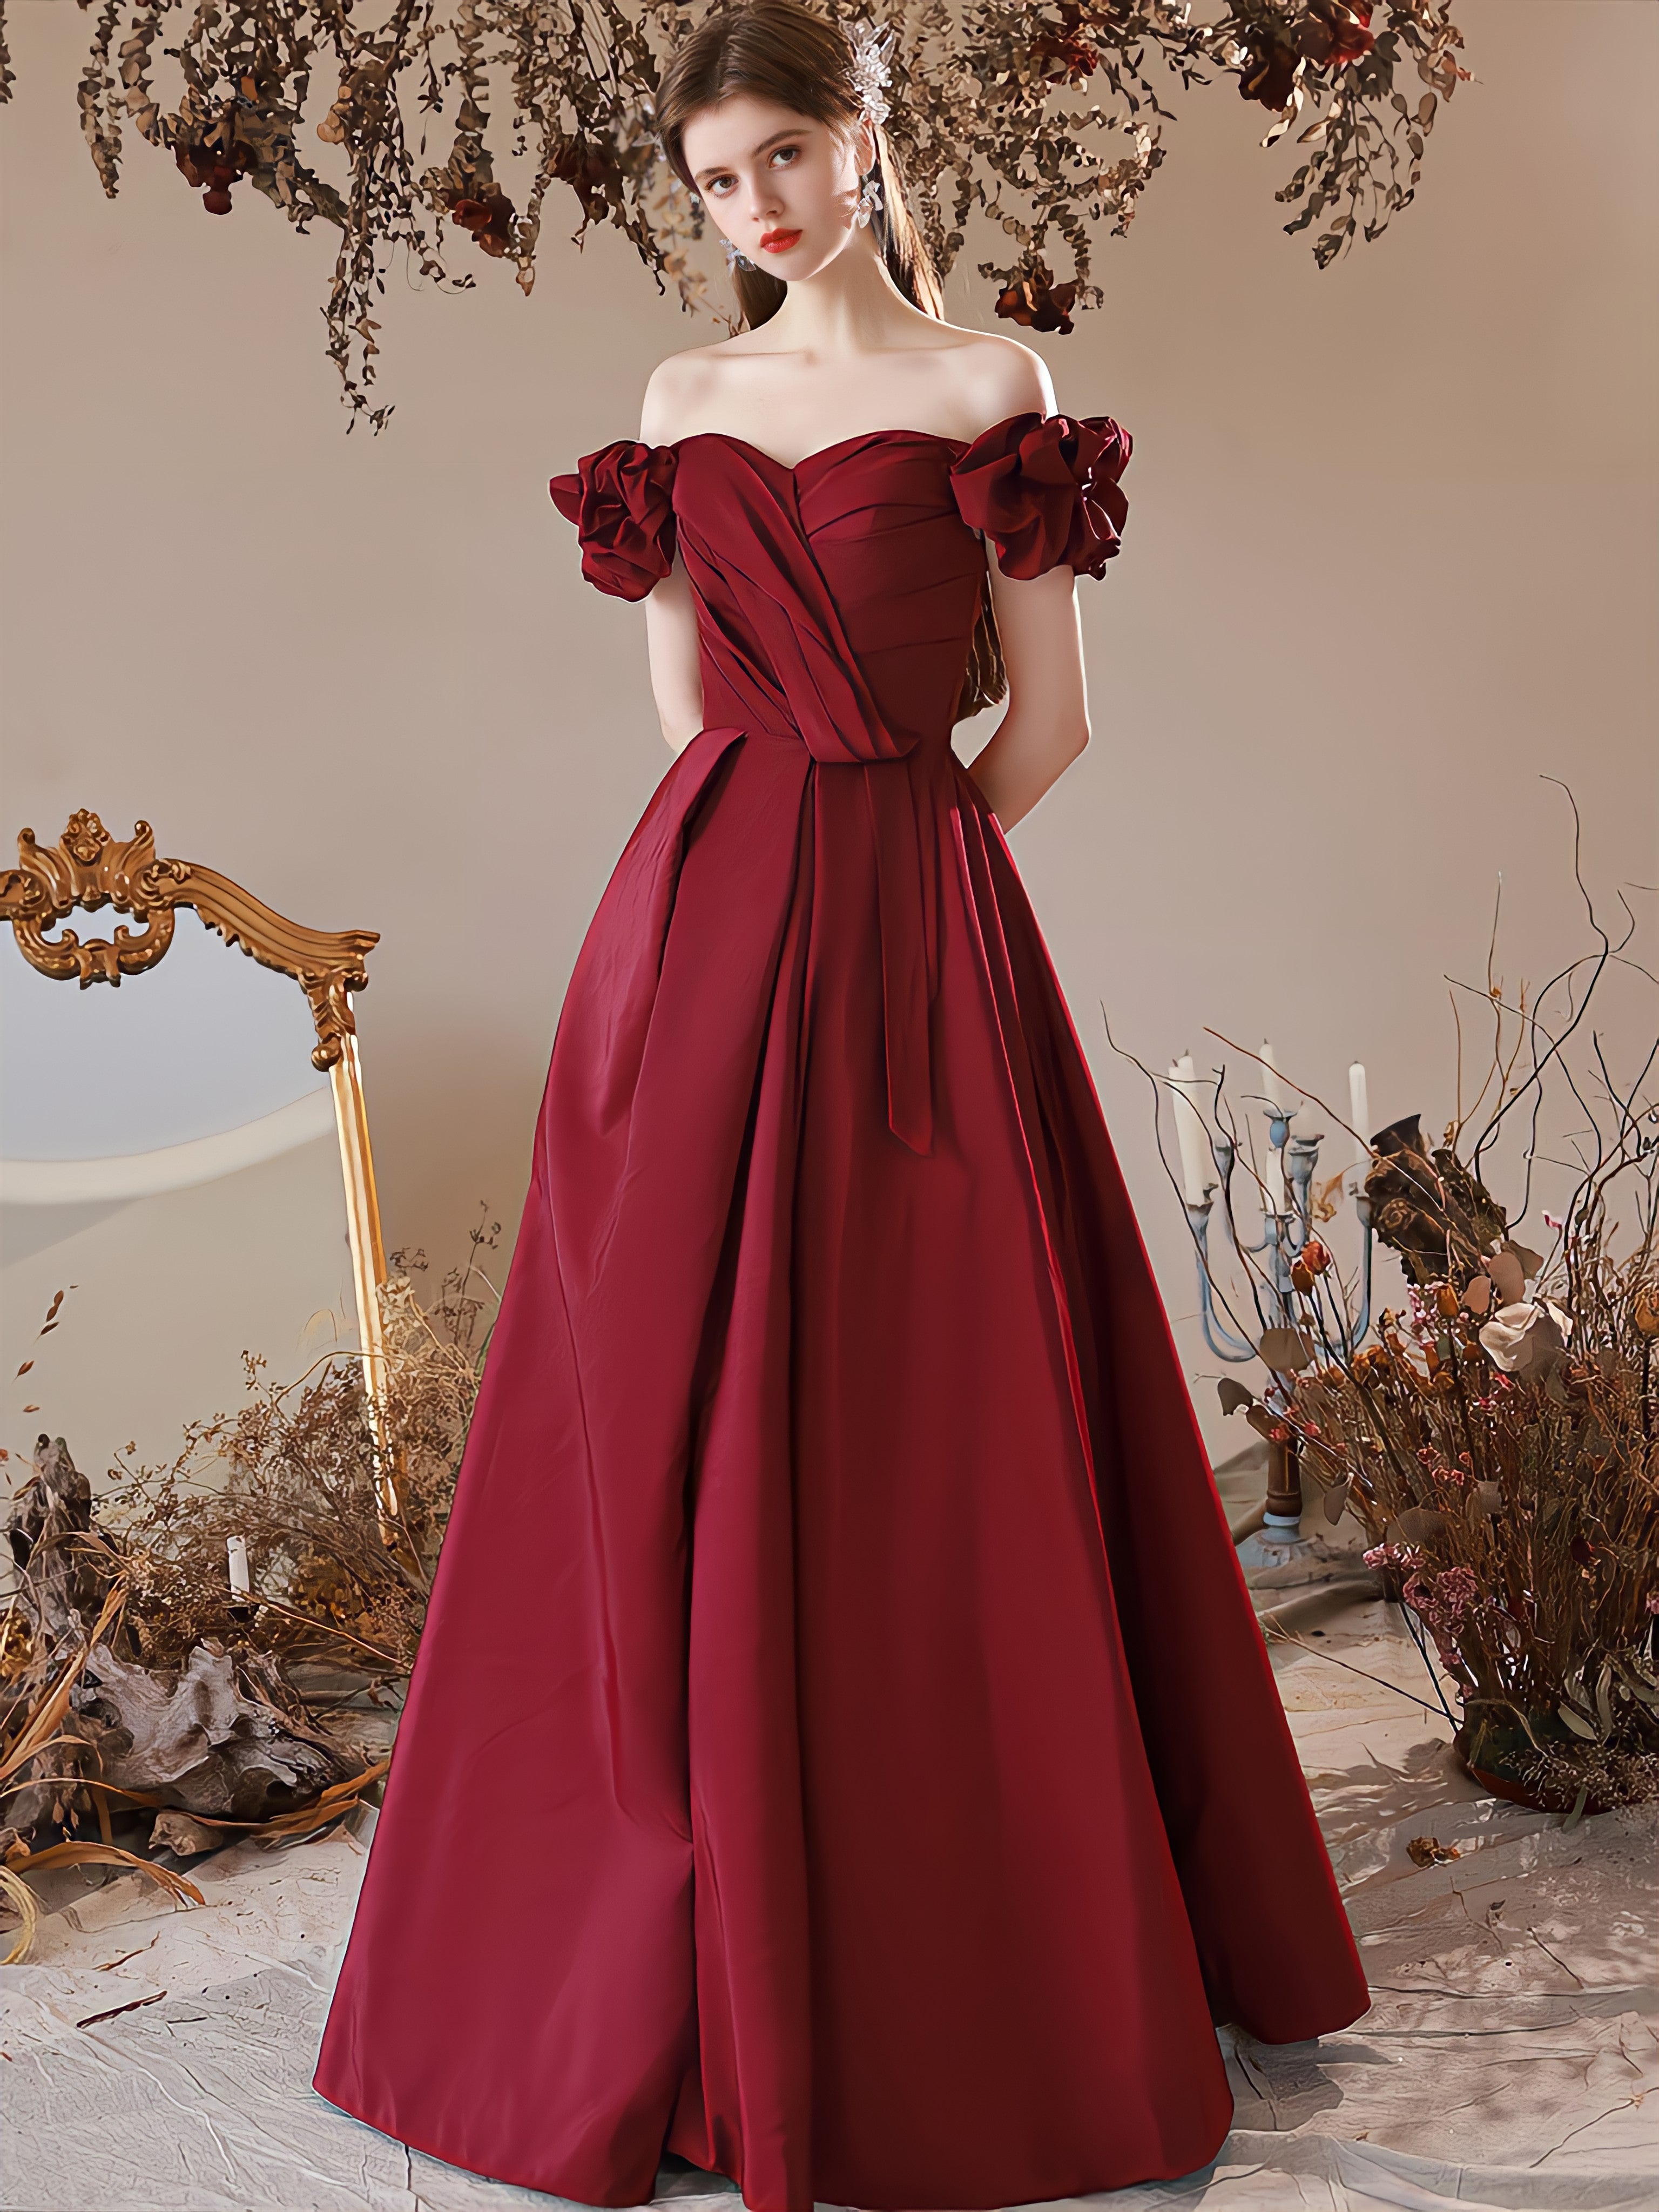 Burgundy Formal Long Prom Dress with Stars Illusion Neckline - $114.9768  #MX16006 - SheProm.com